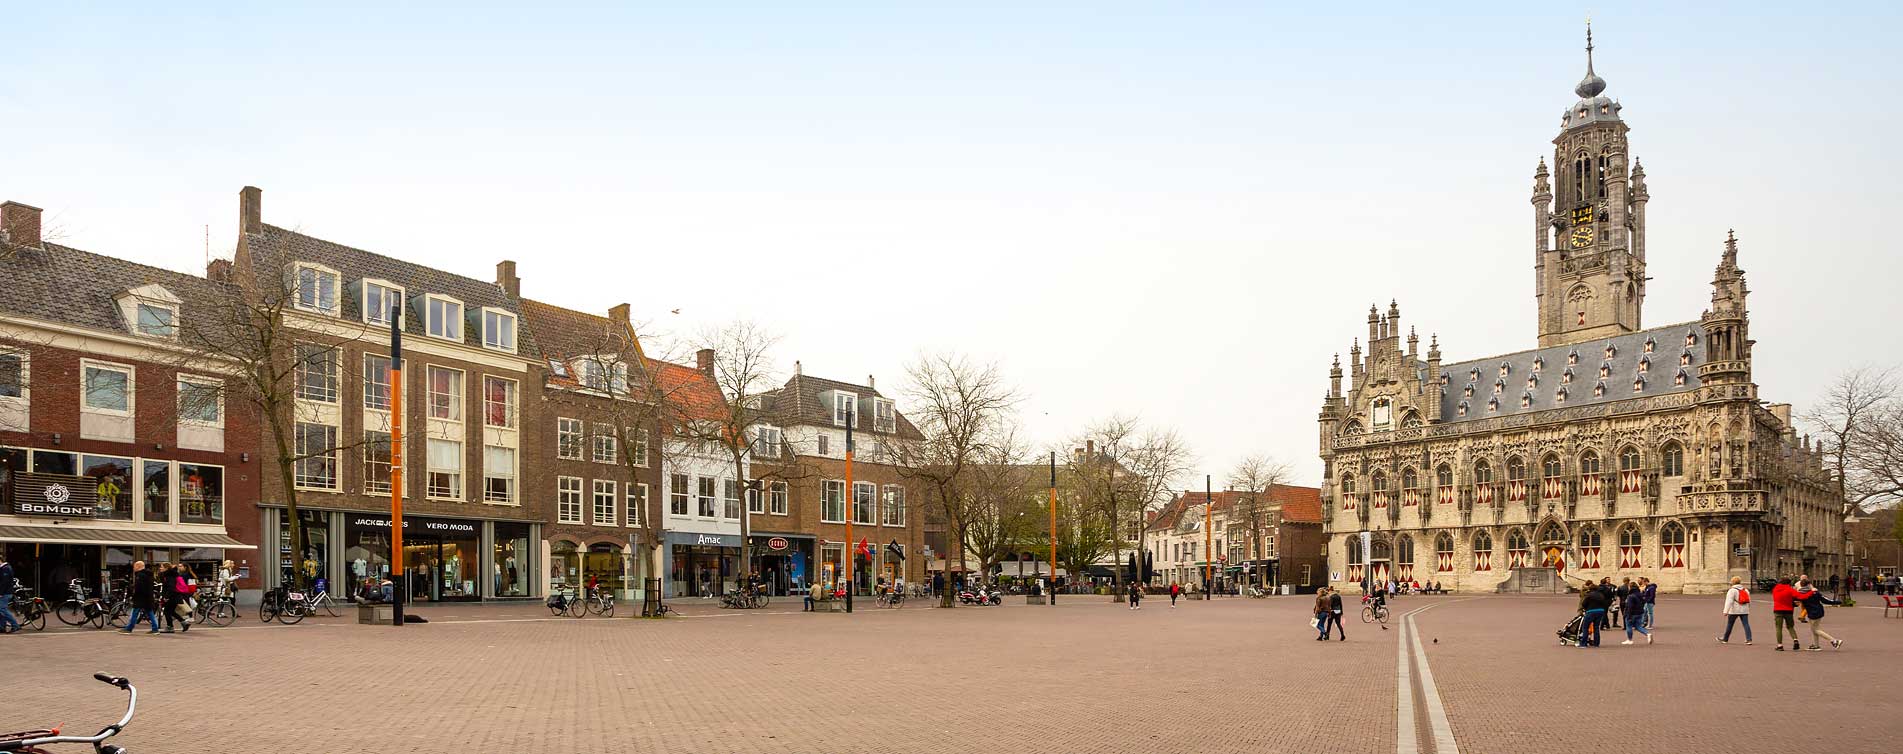 Stadhuis en marktplein van Middelburg - Corstanje Assurantiën